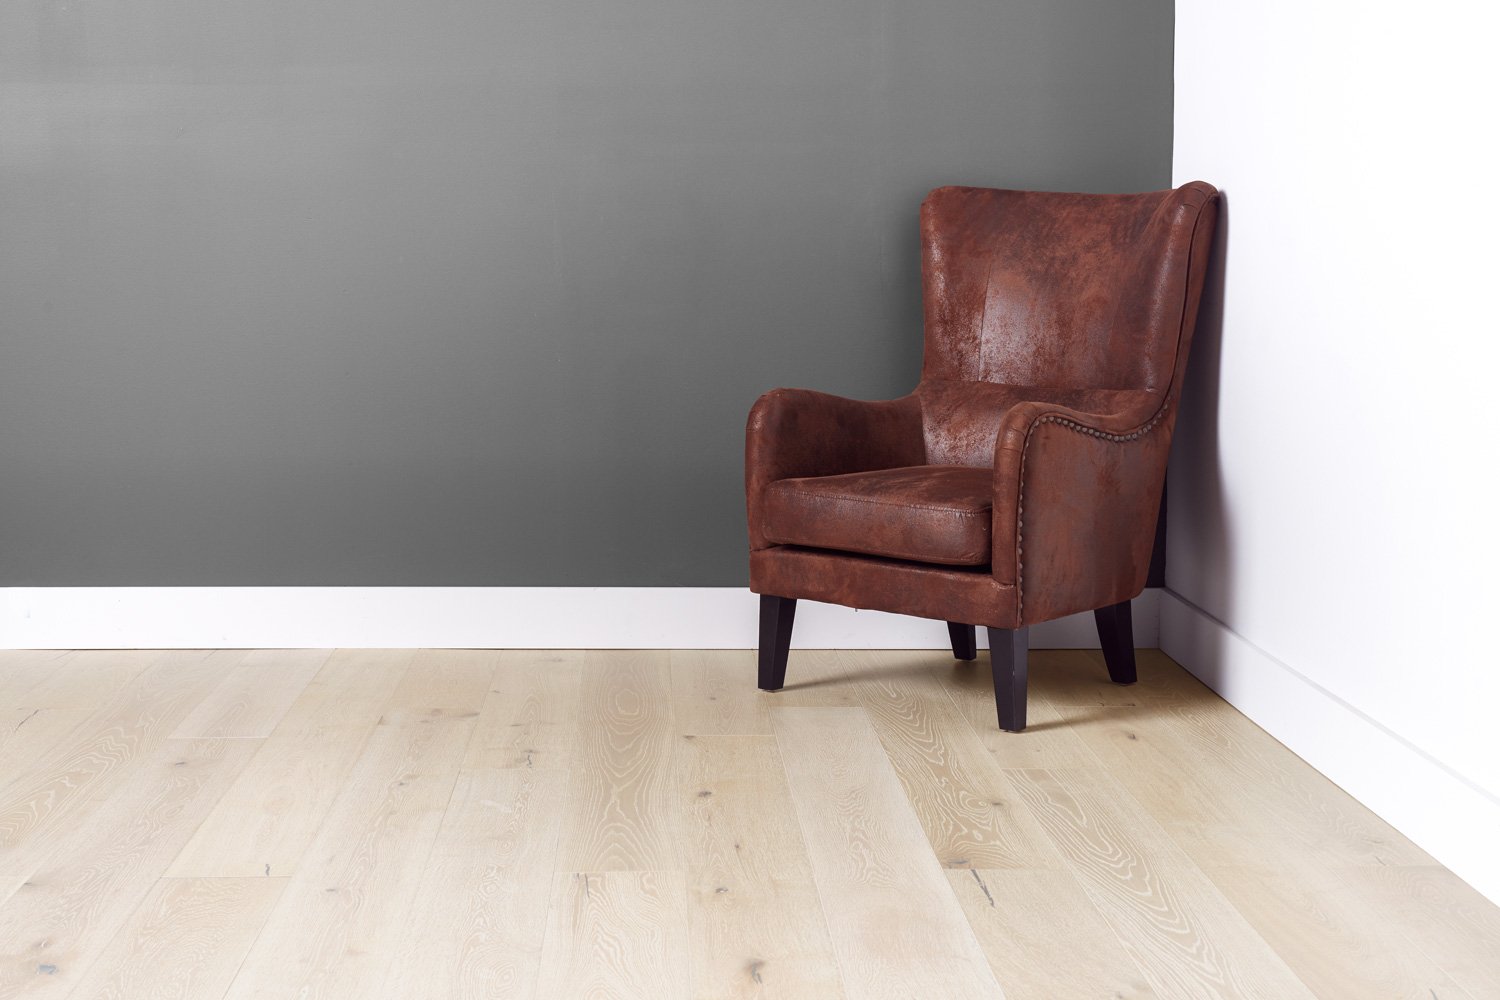 Vernazza 7-1/2″ Wide – White Oak Engineered Hardwood Flooring